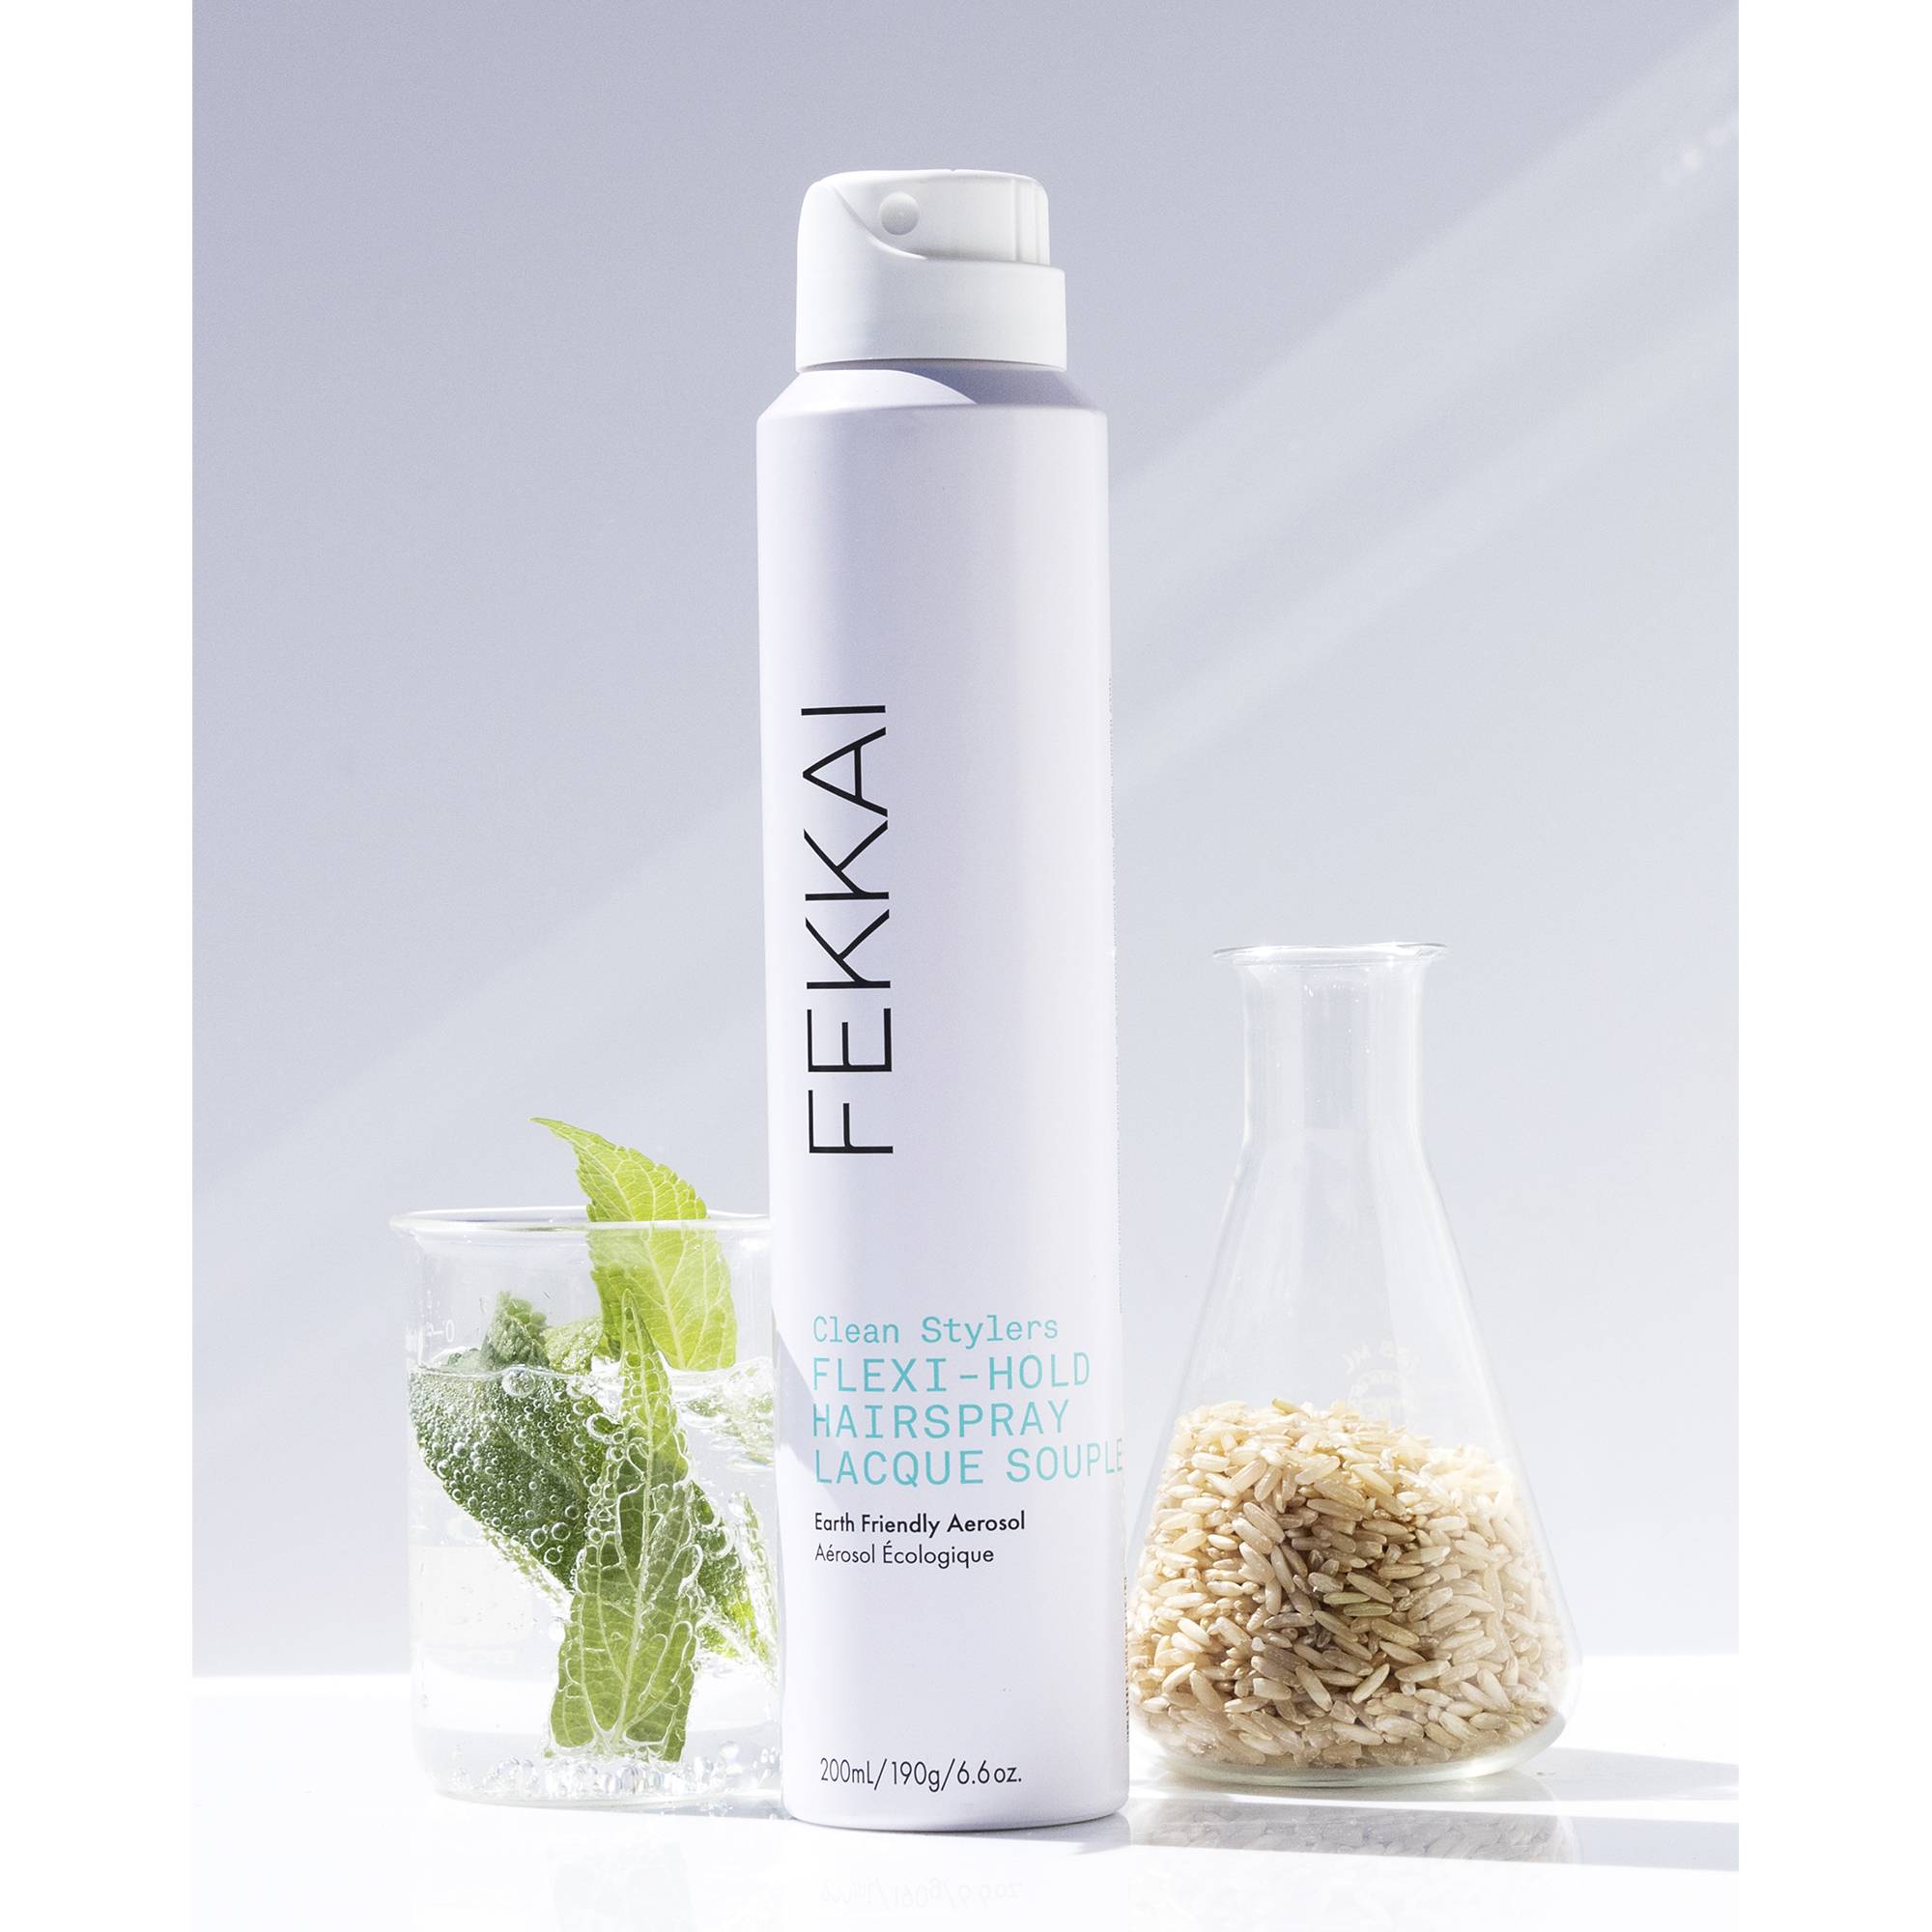 Laque souple Flexi-Hold Hairspray Clean Stylers de la marque Fekkai Contenance 200ml - 2